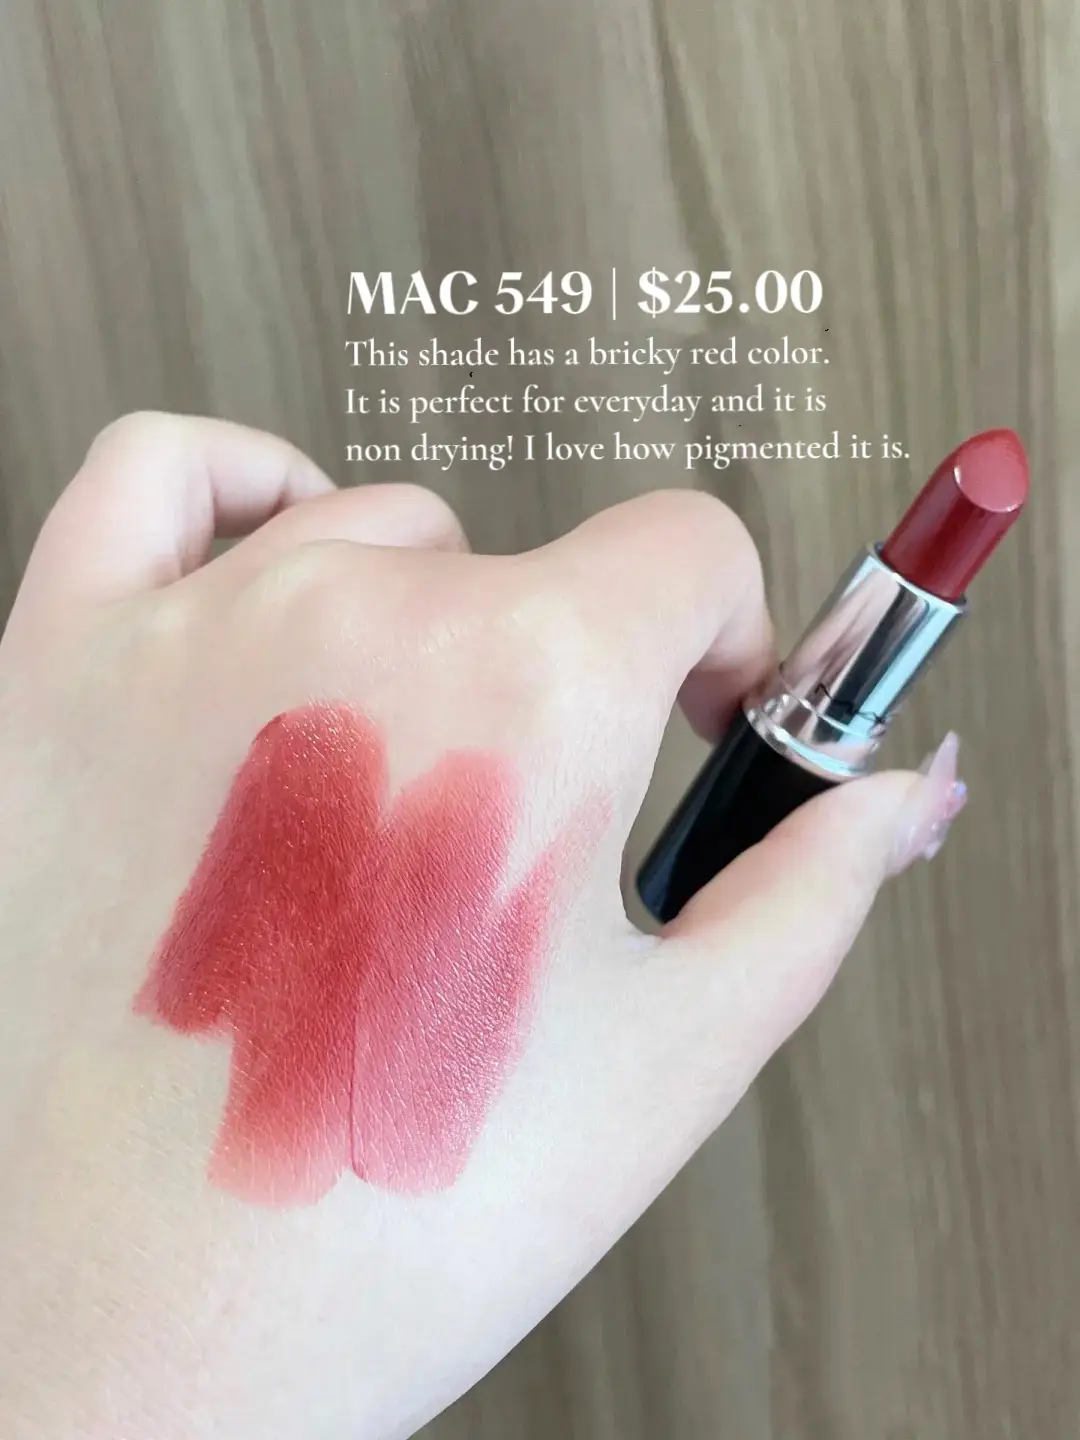 MAC Honeylove Lipstick Review, Swatches, Price, Dupe